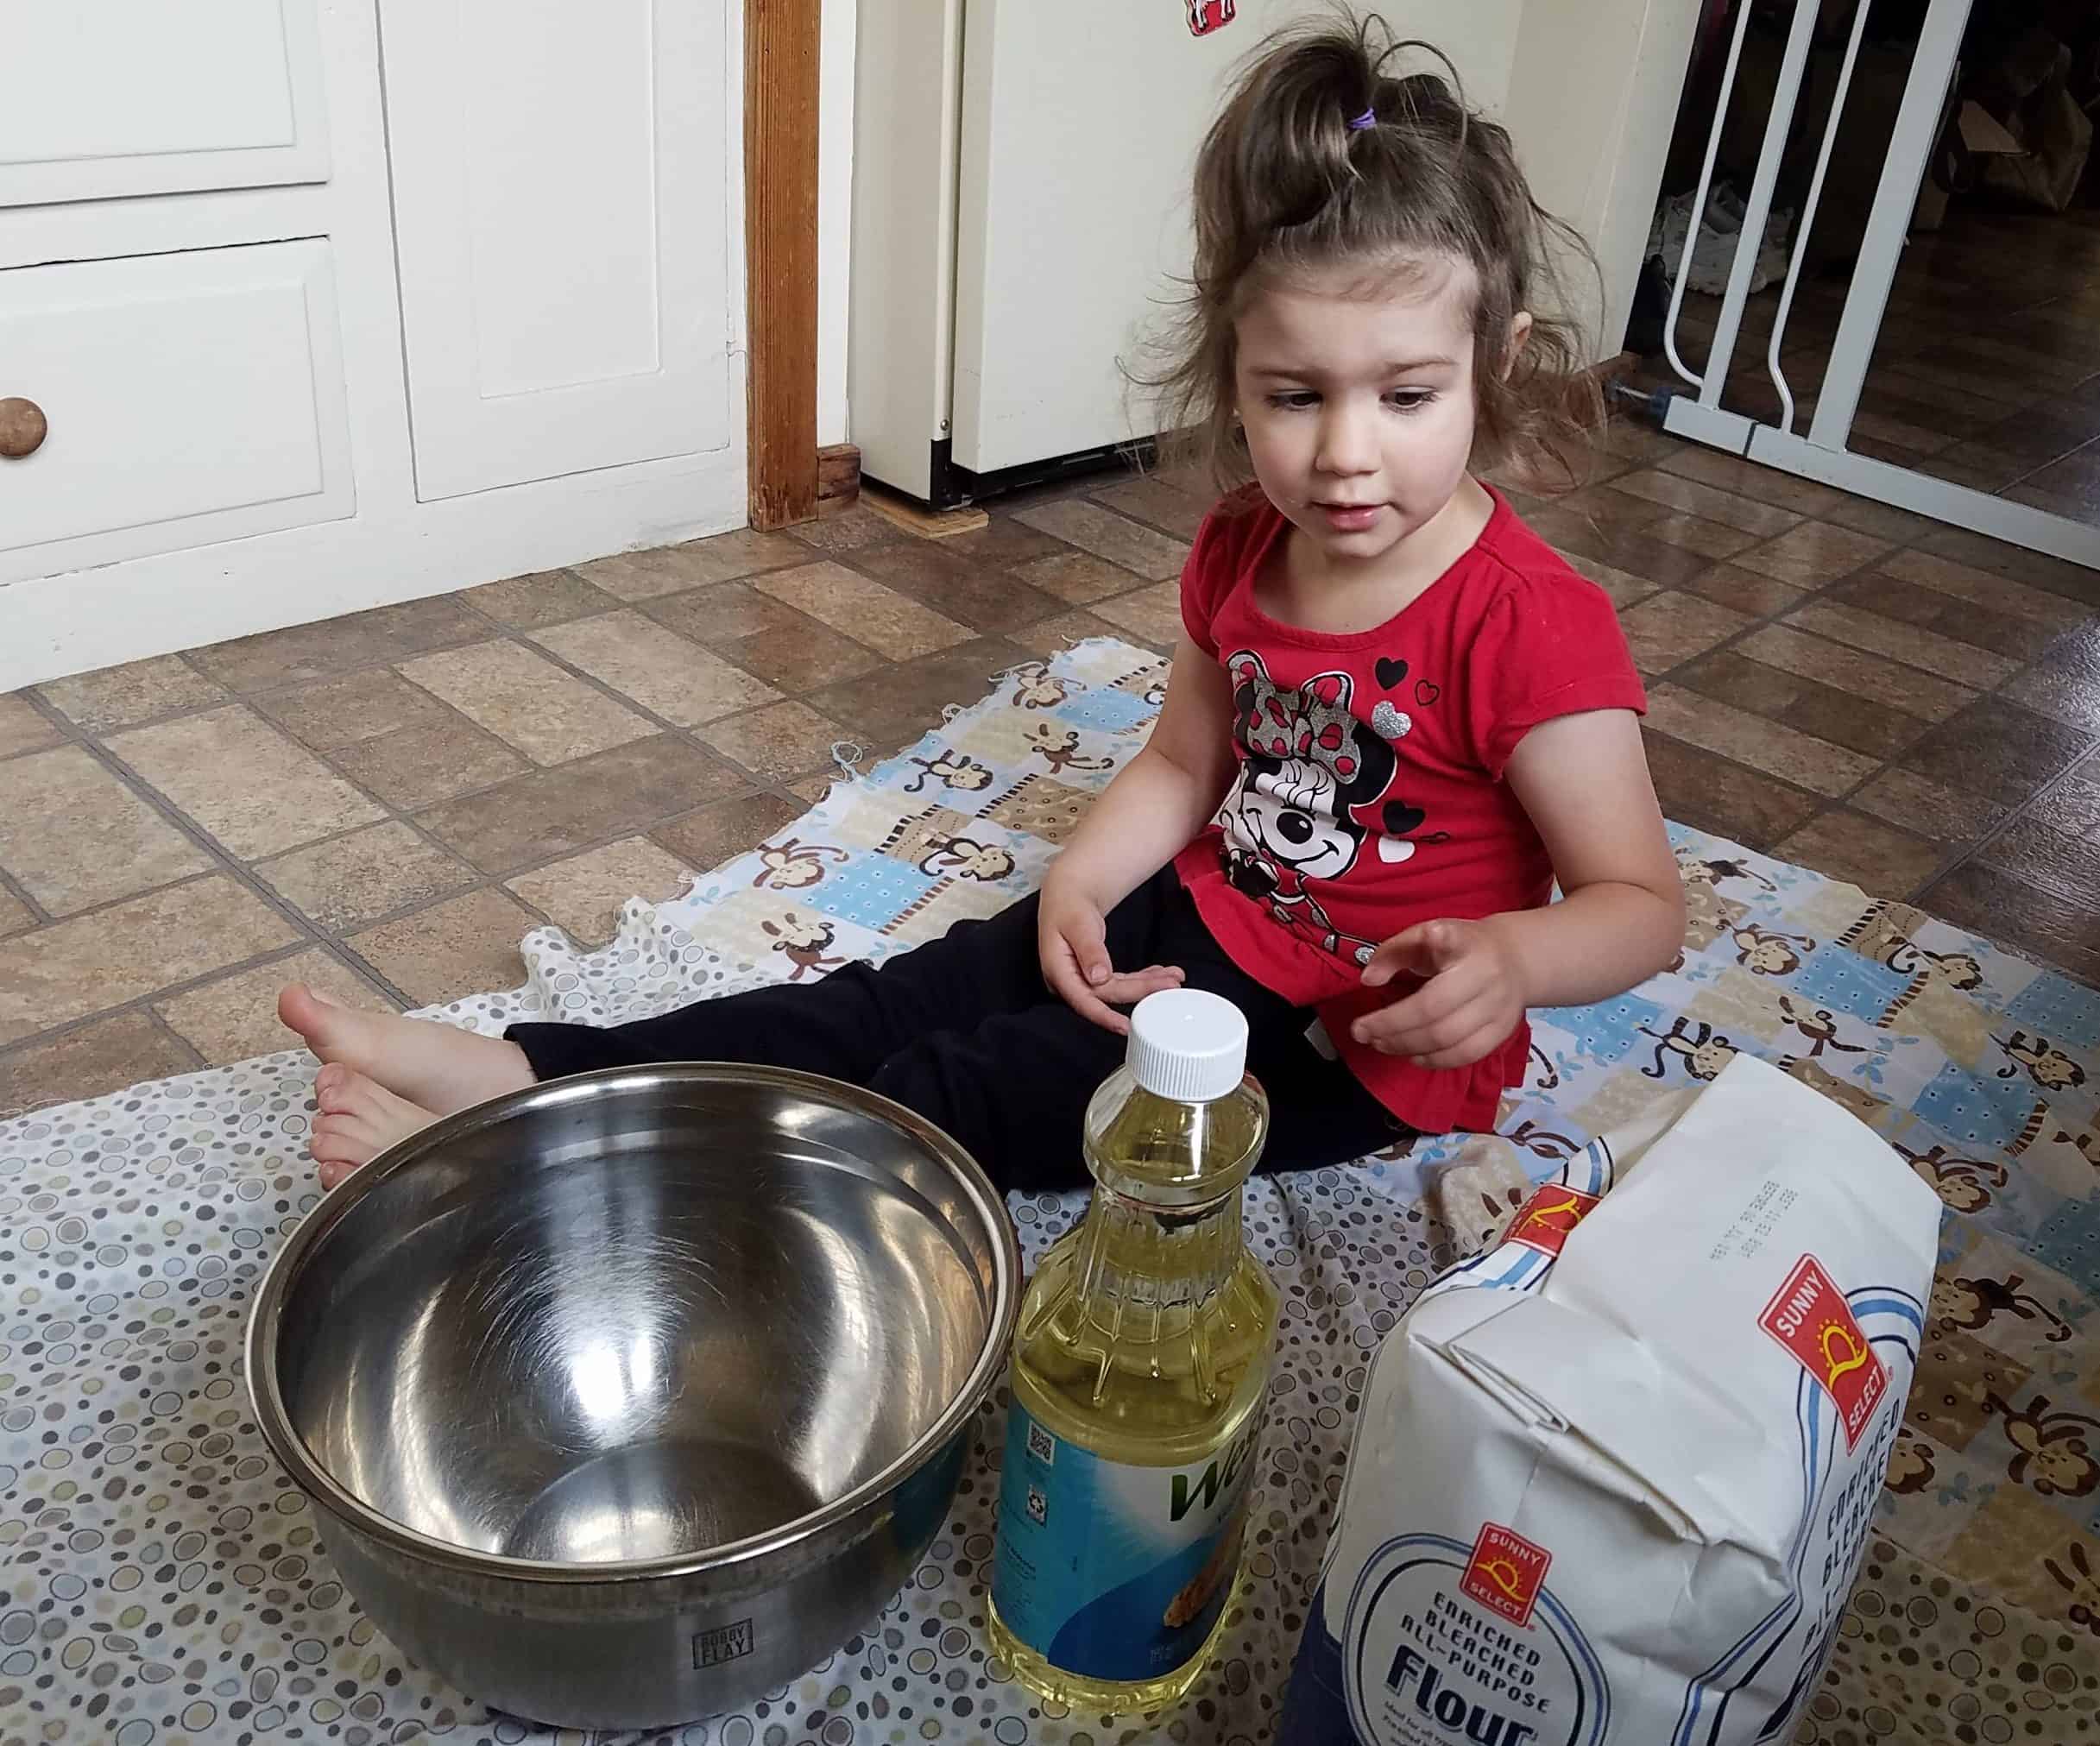 ingredients to make DIY sensory cloud dough aromatherapy for kids